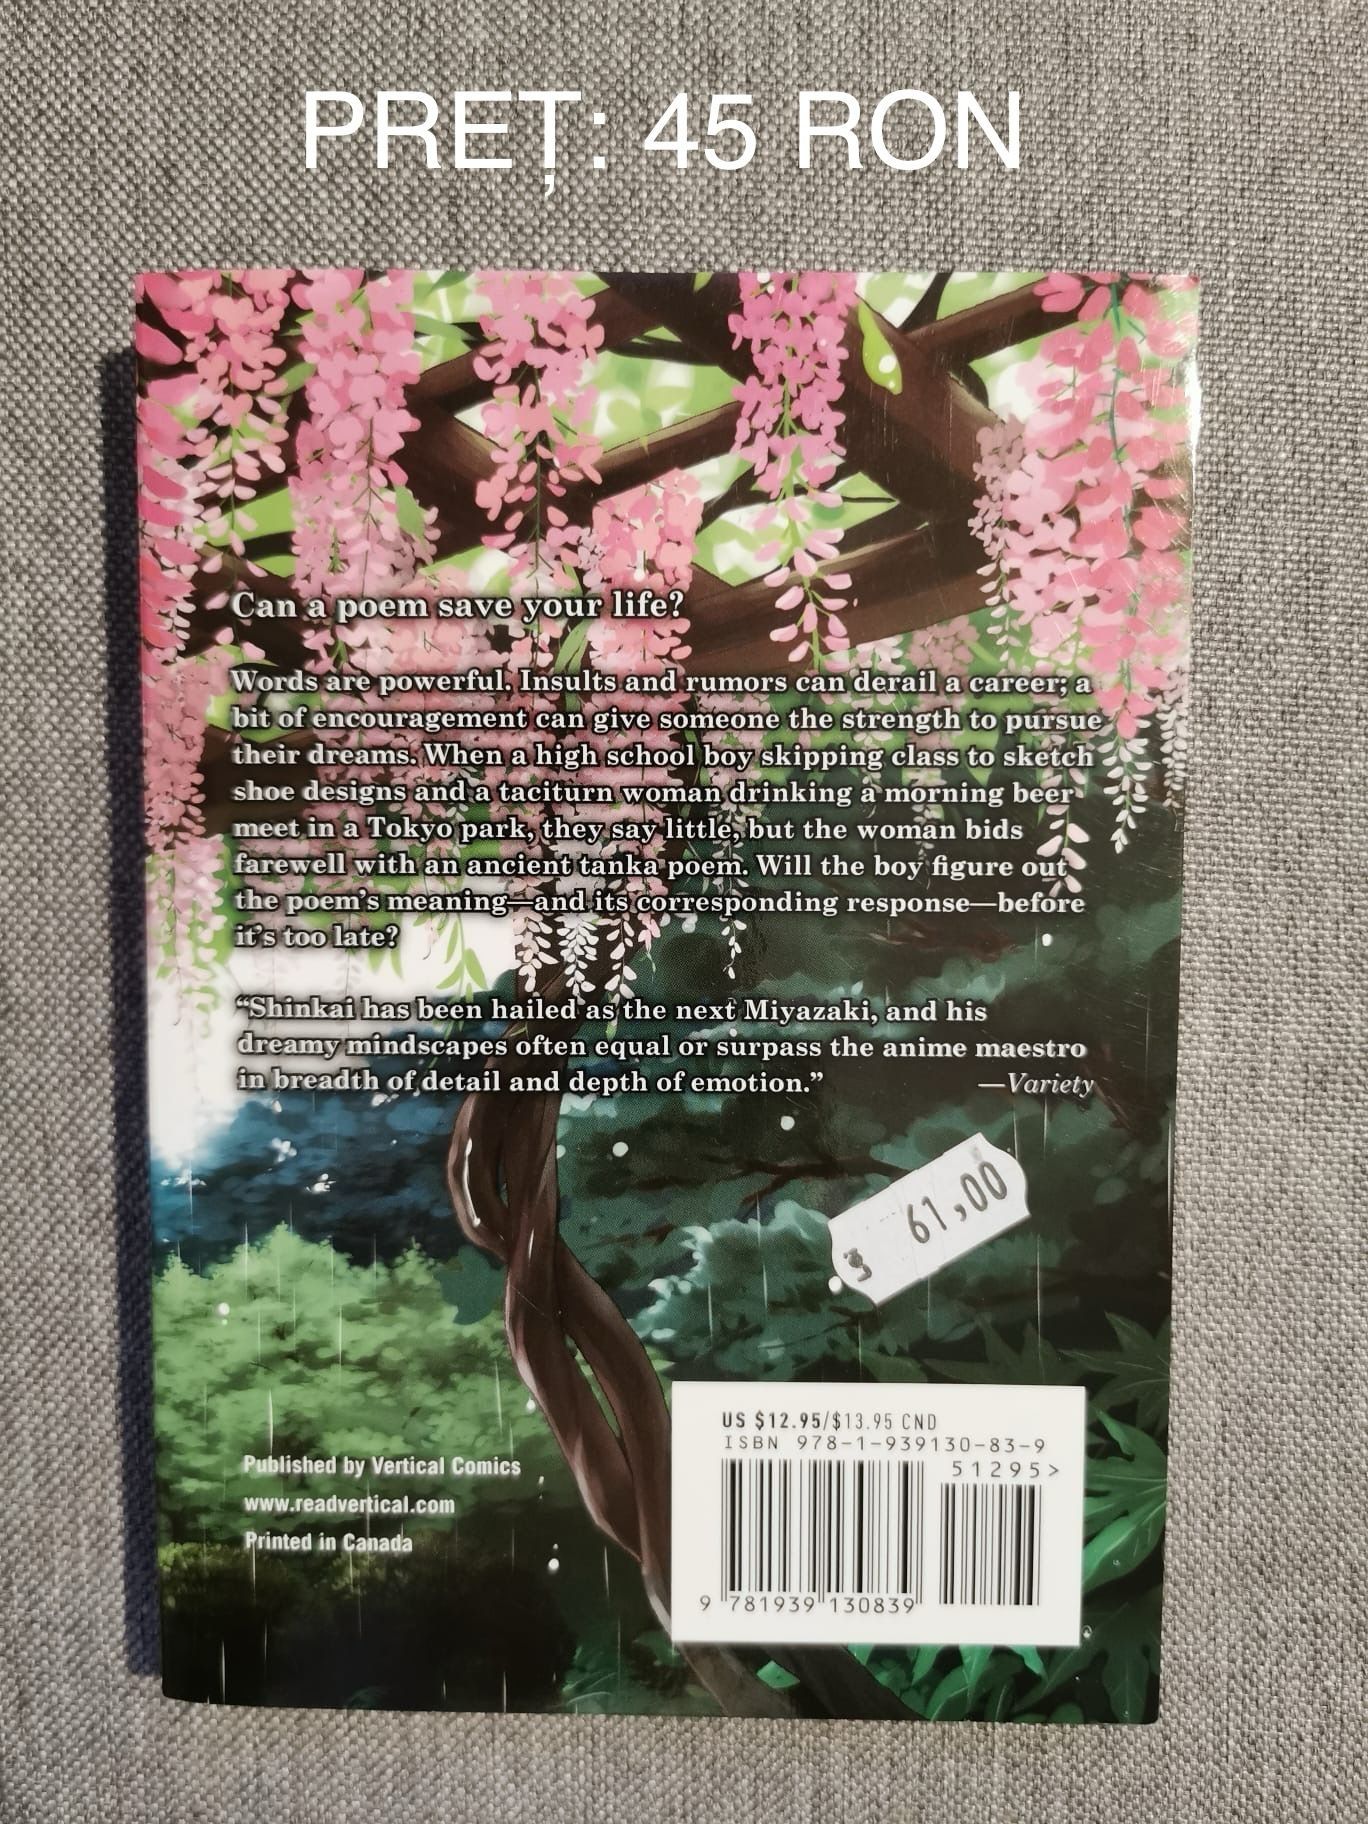 The garden of words by Makoto Shinkai